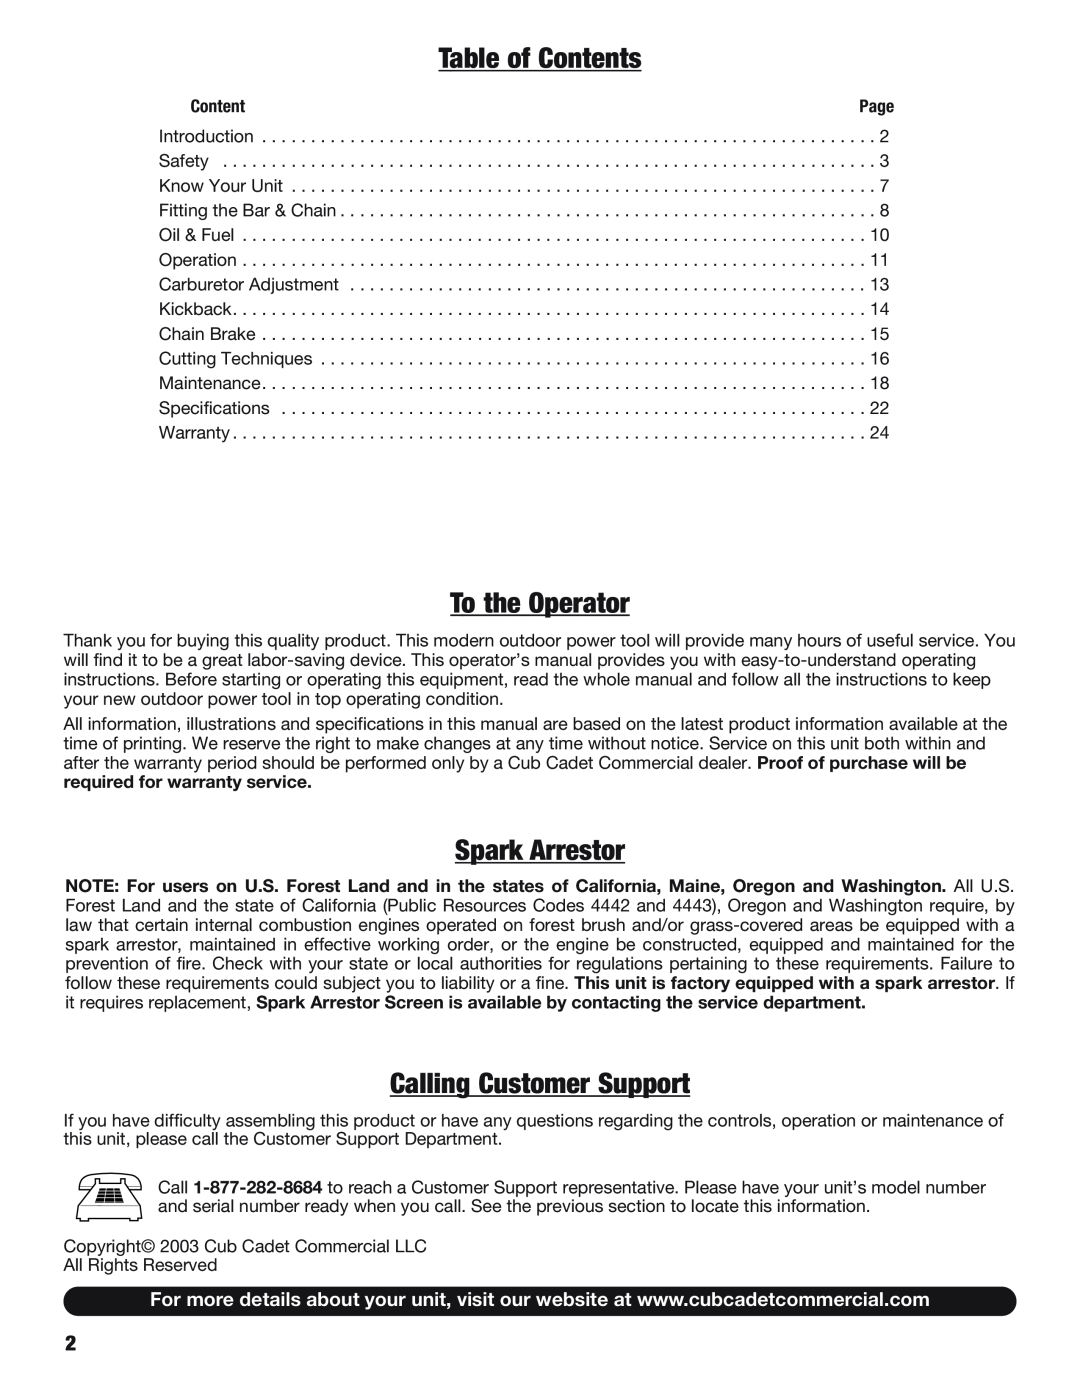 Cub Cadet CS5018, CS5220 manual Table of Contents, To the Operator, Spark Arrestor, Calling Customer Support 